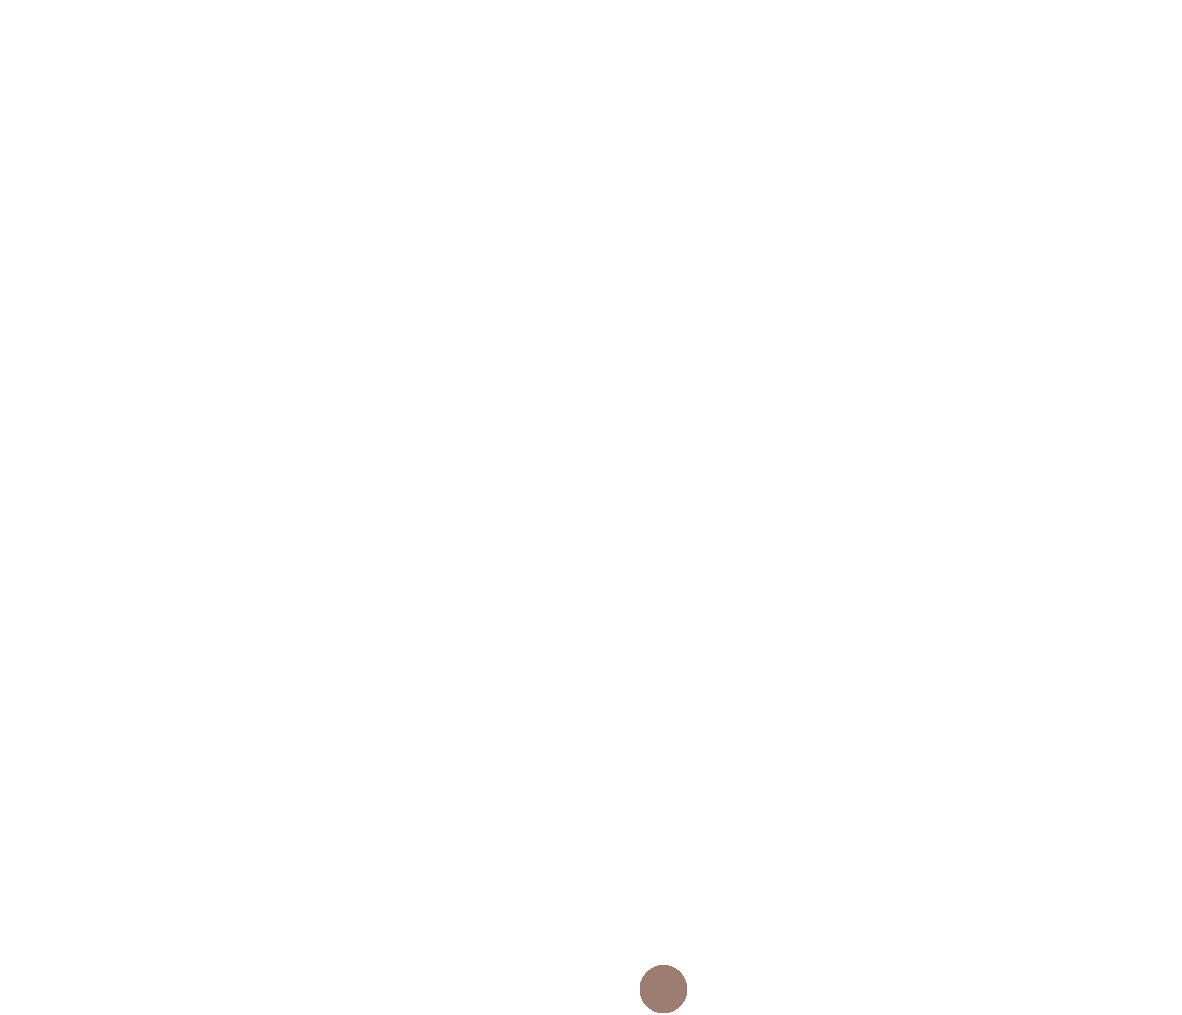 Smits Real Estate